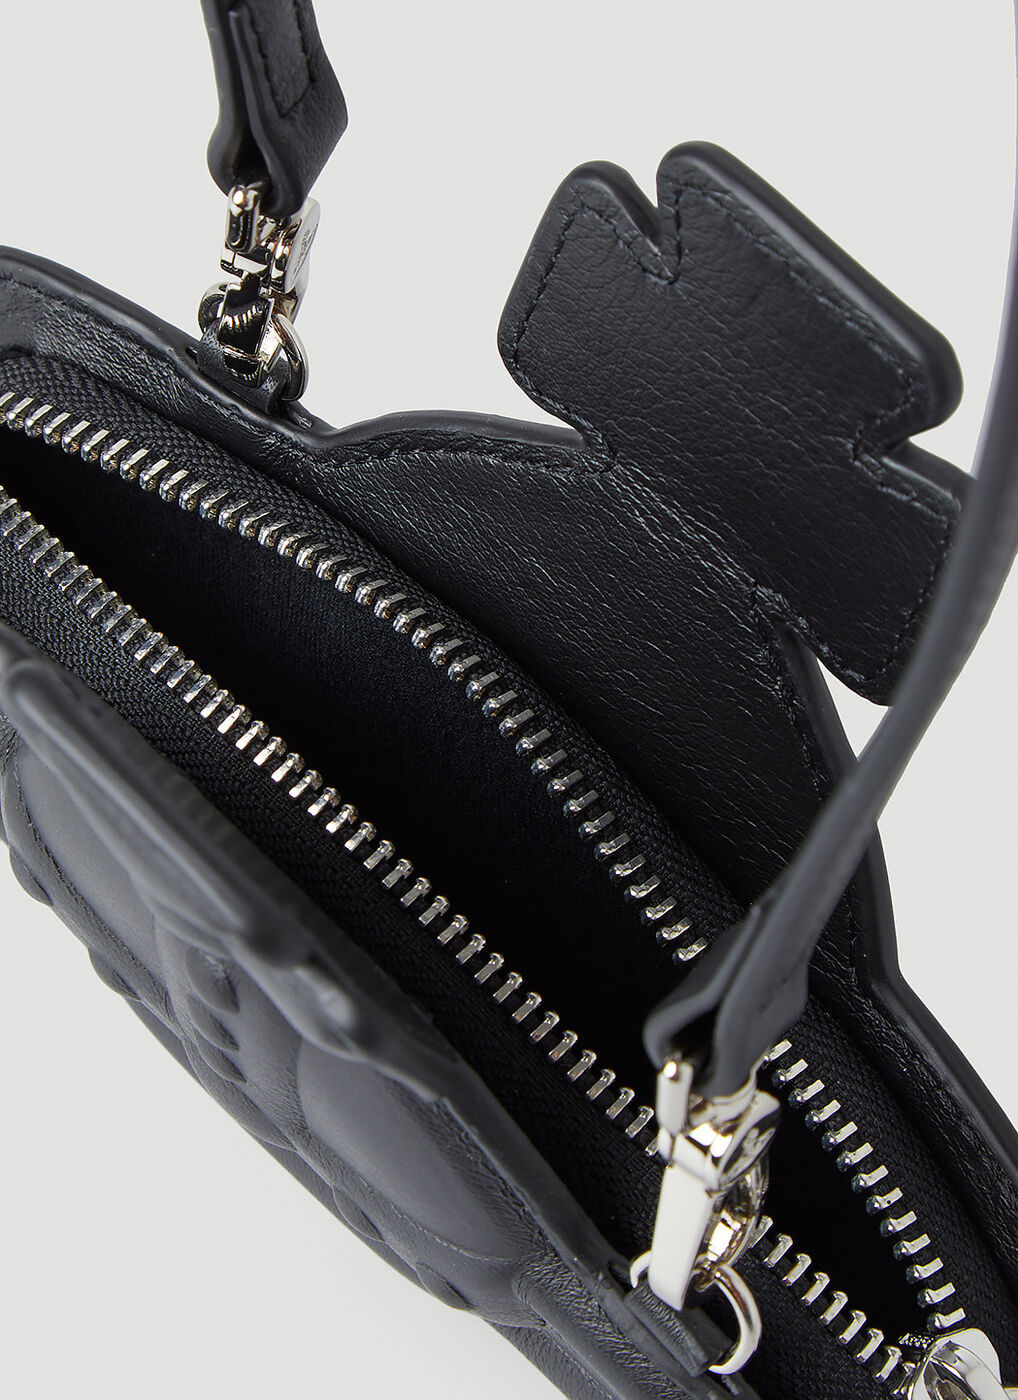 Chelsea Nano Orb Shoulder Bag in Black Vivienne Westwood